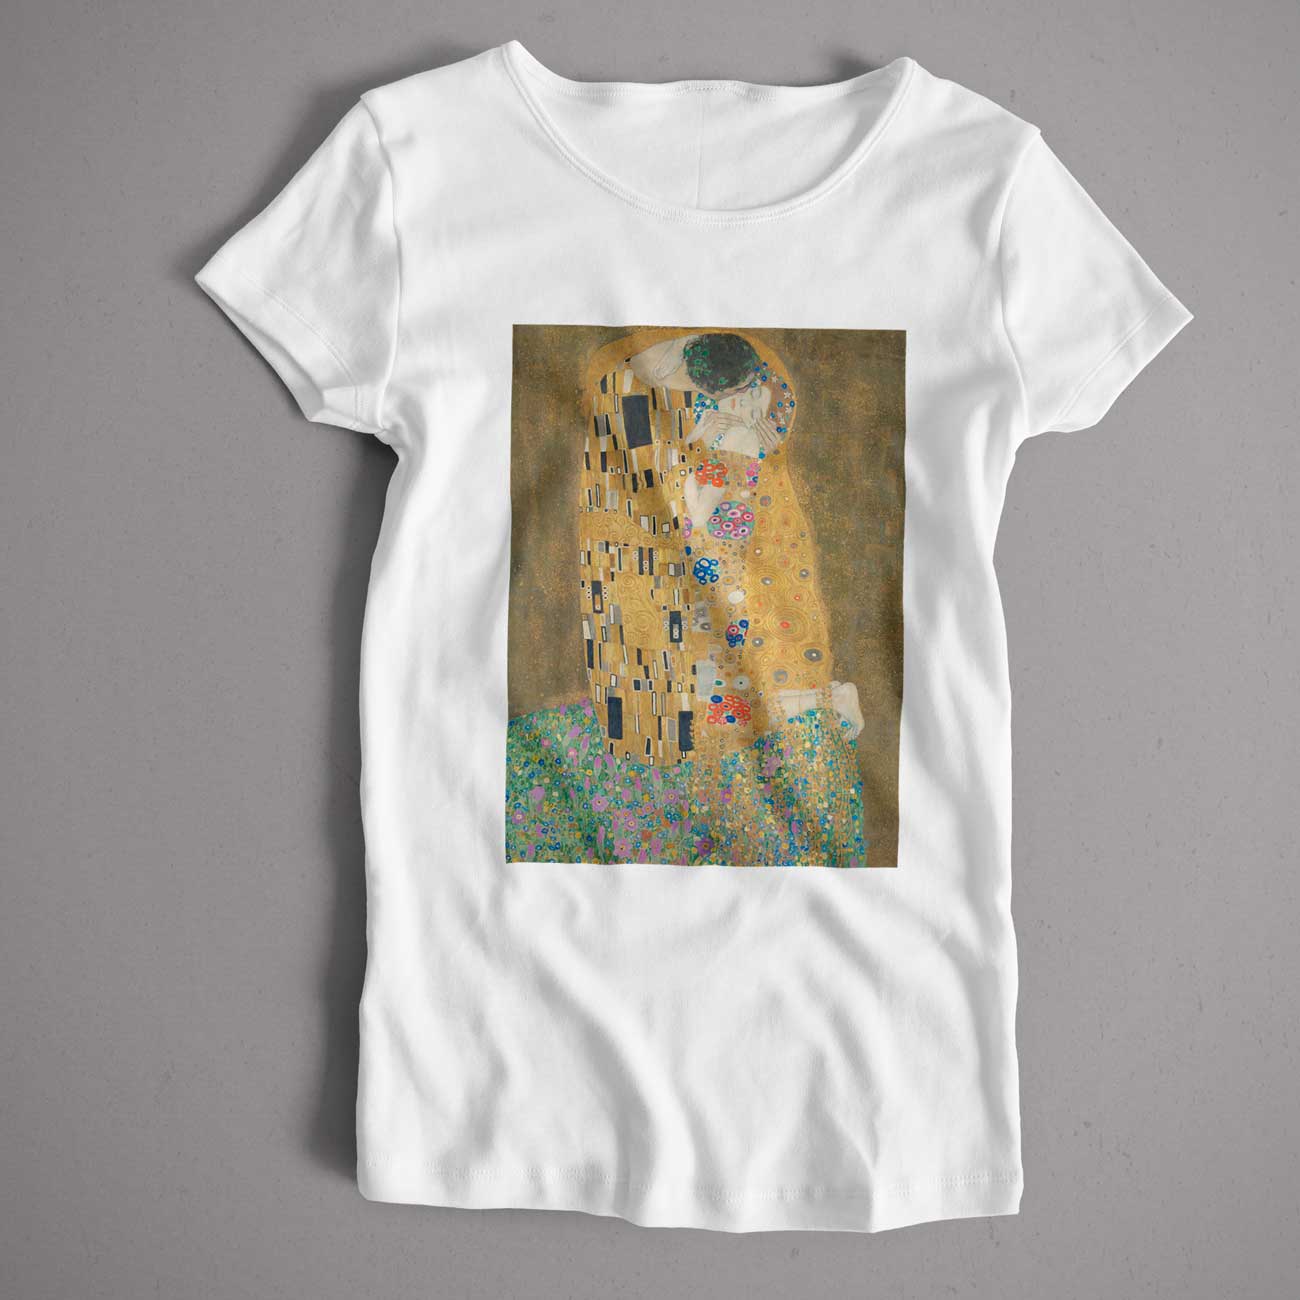 Klimt T Shirt - The Kiss An Old Skool Hooligans Classic Art Tee